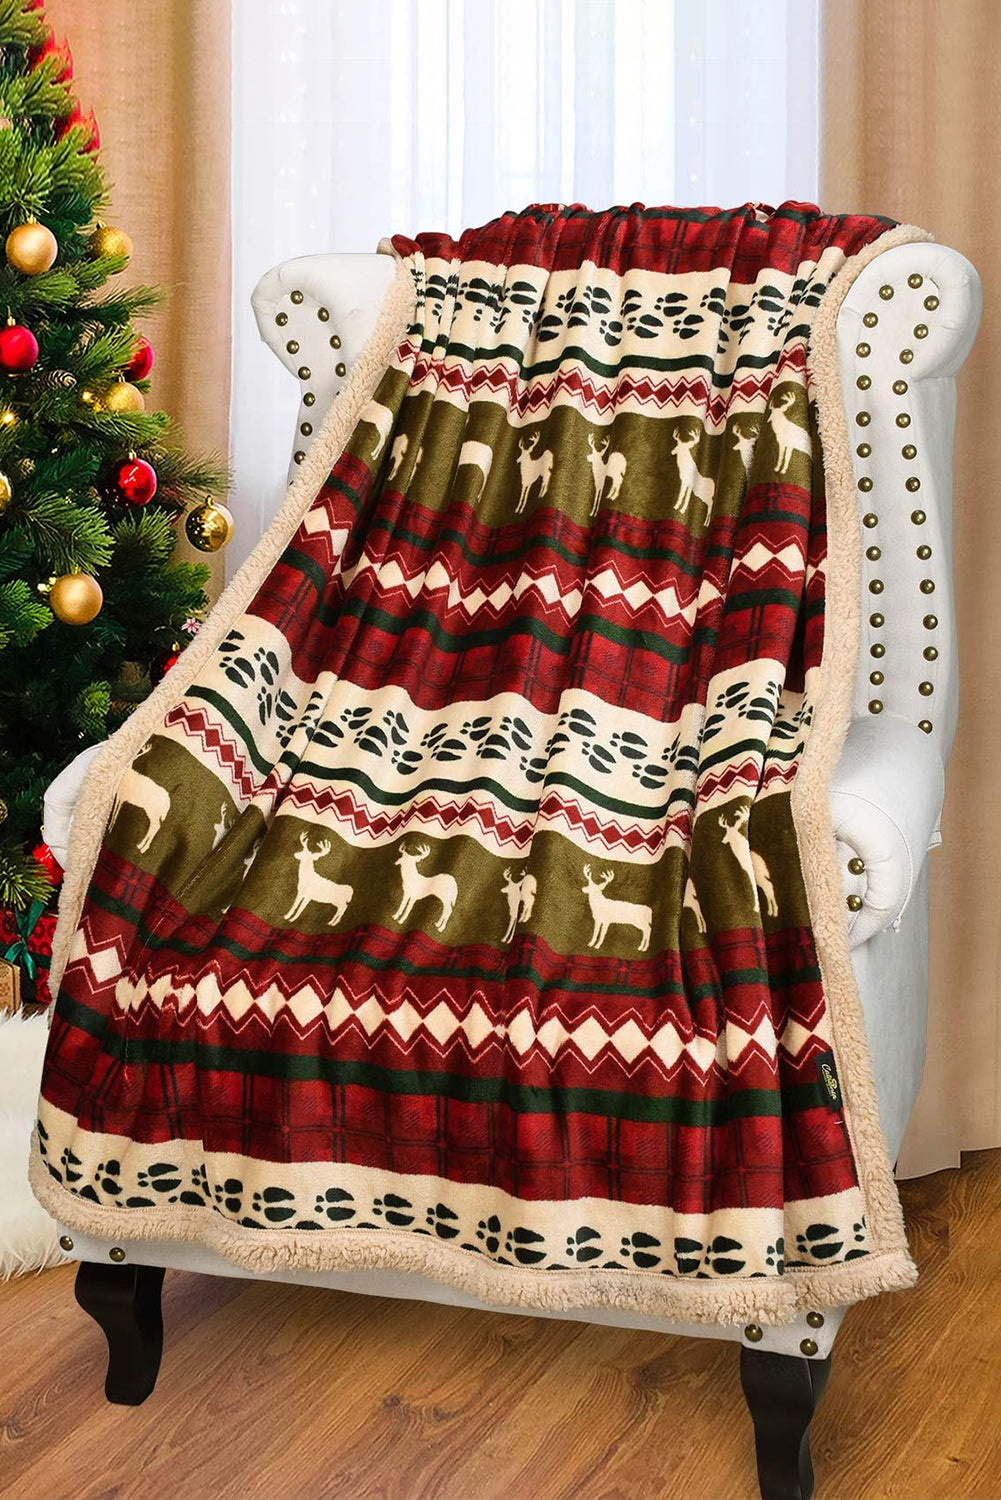 Fiery Red Christmas Elk Print Reversible Sherpa Fleece Blanket